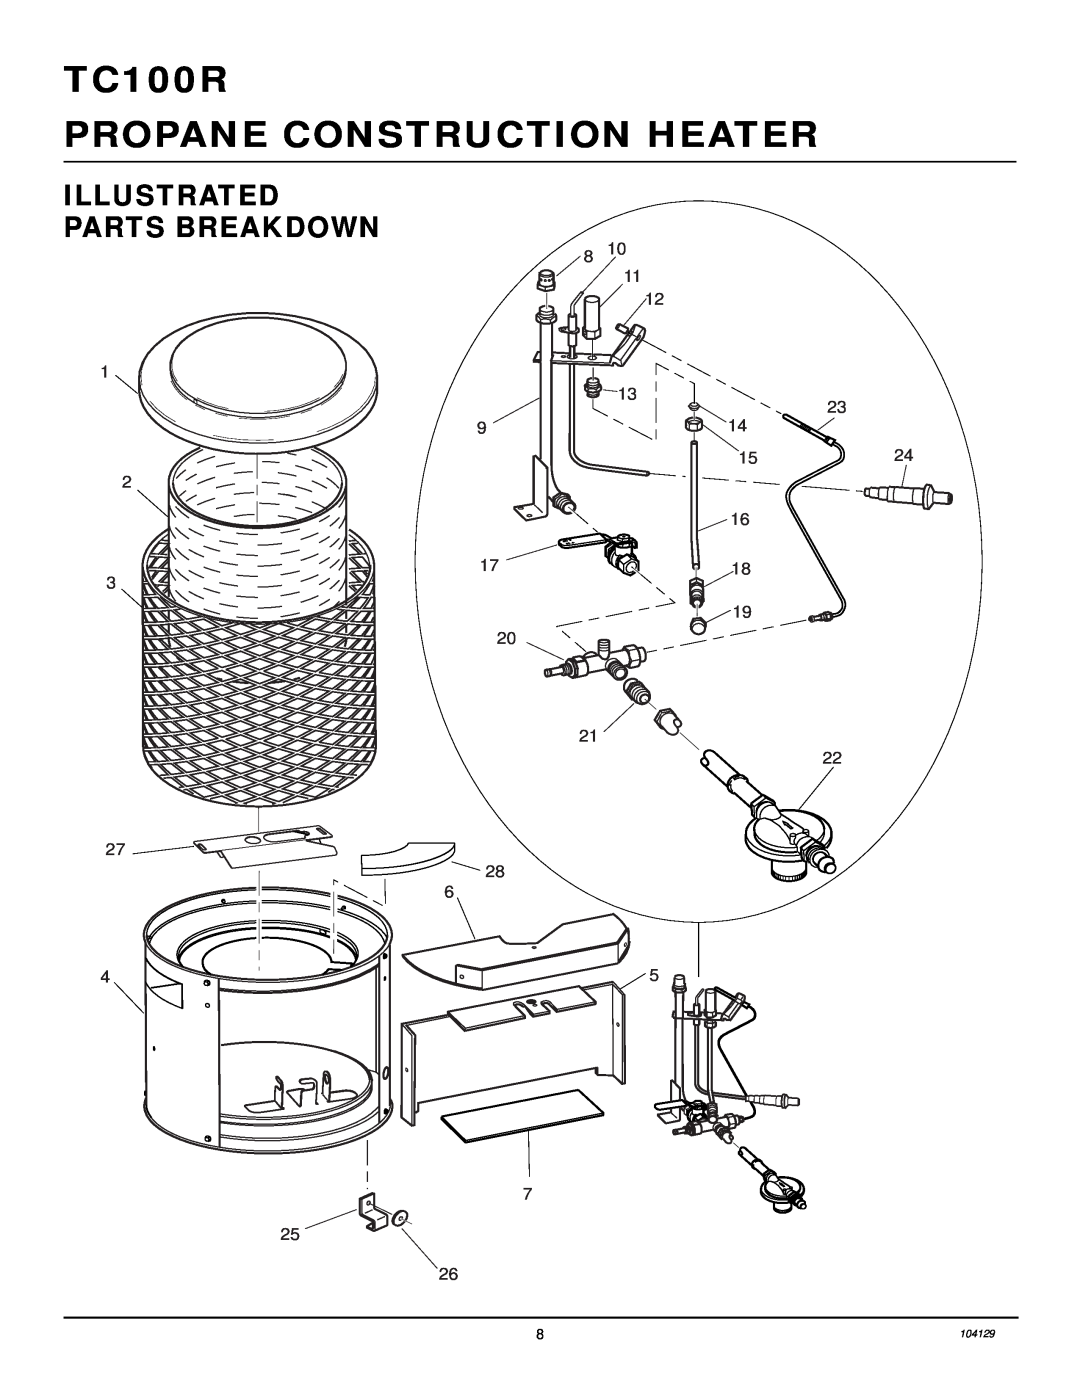 Desa owner manual Illustrated Parts Breakdown, TC100R PROPANE CONSTRUCTION HEATER 